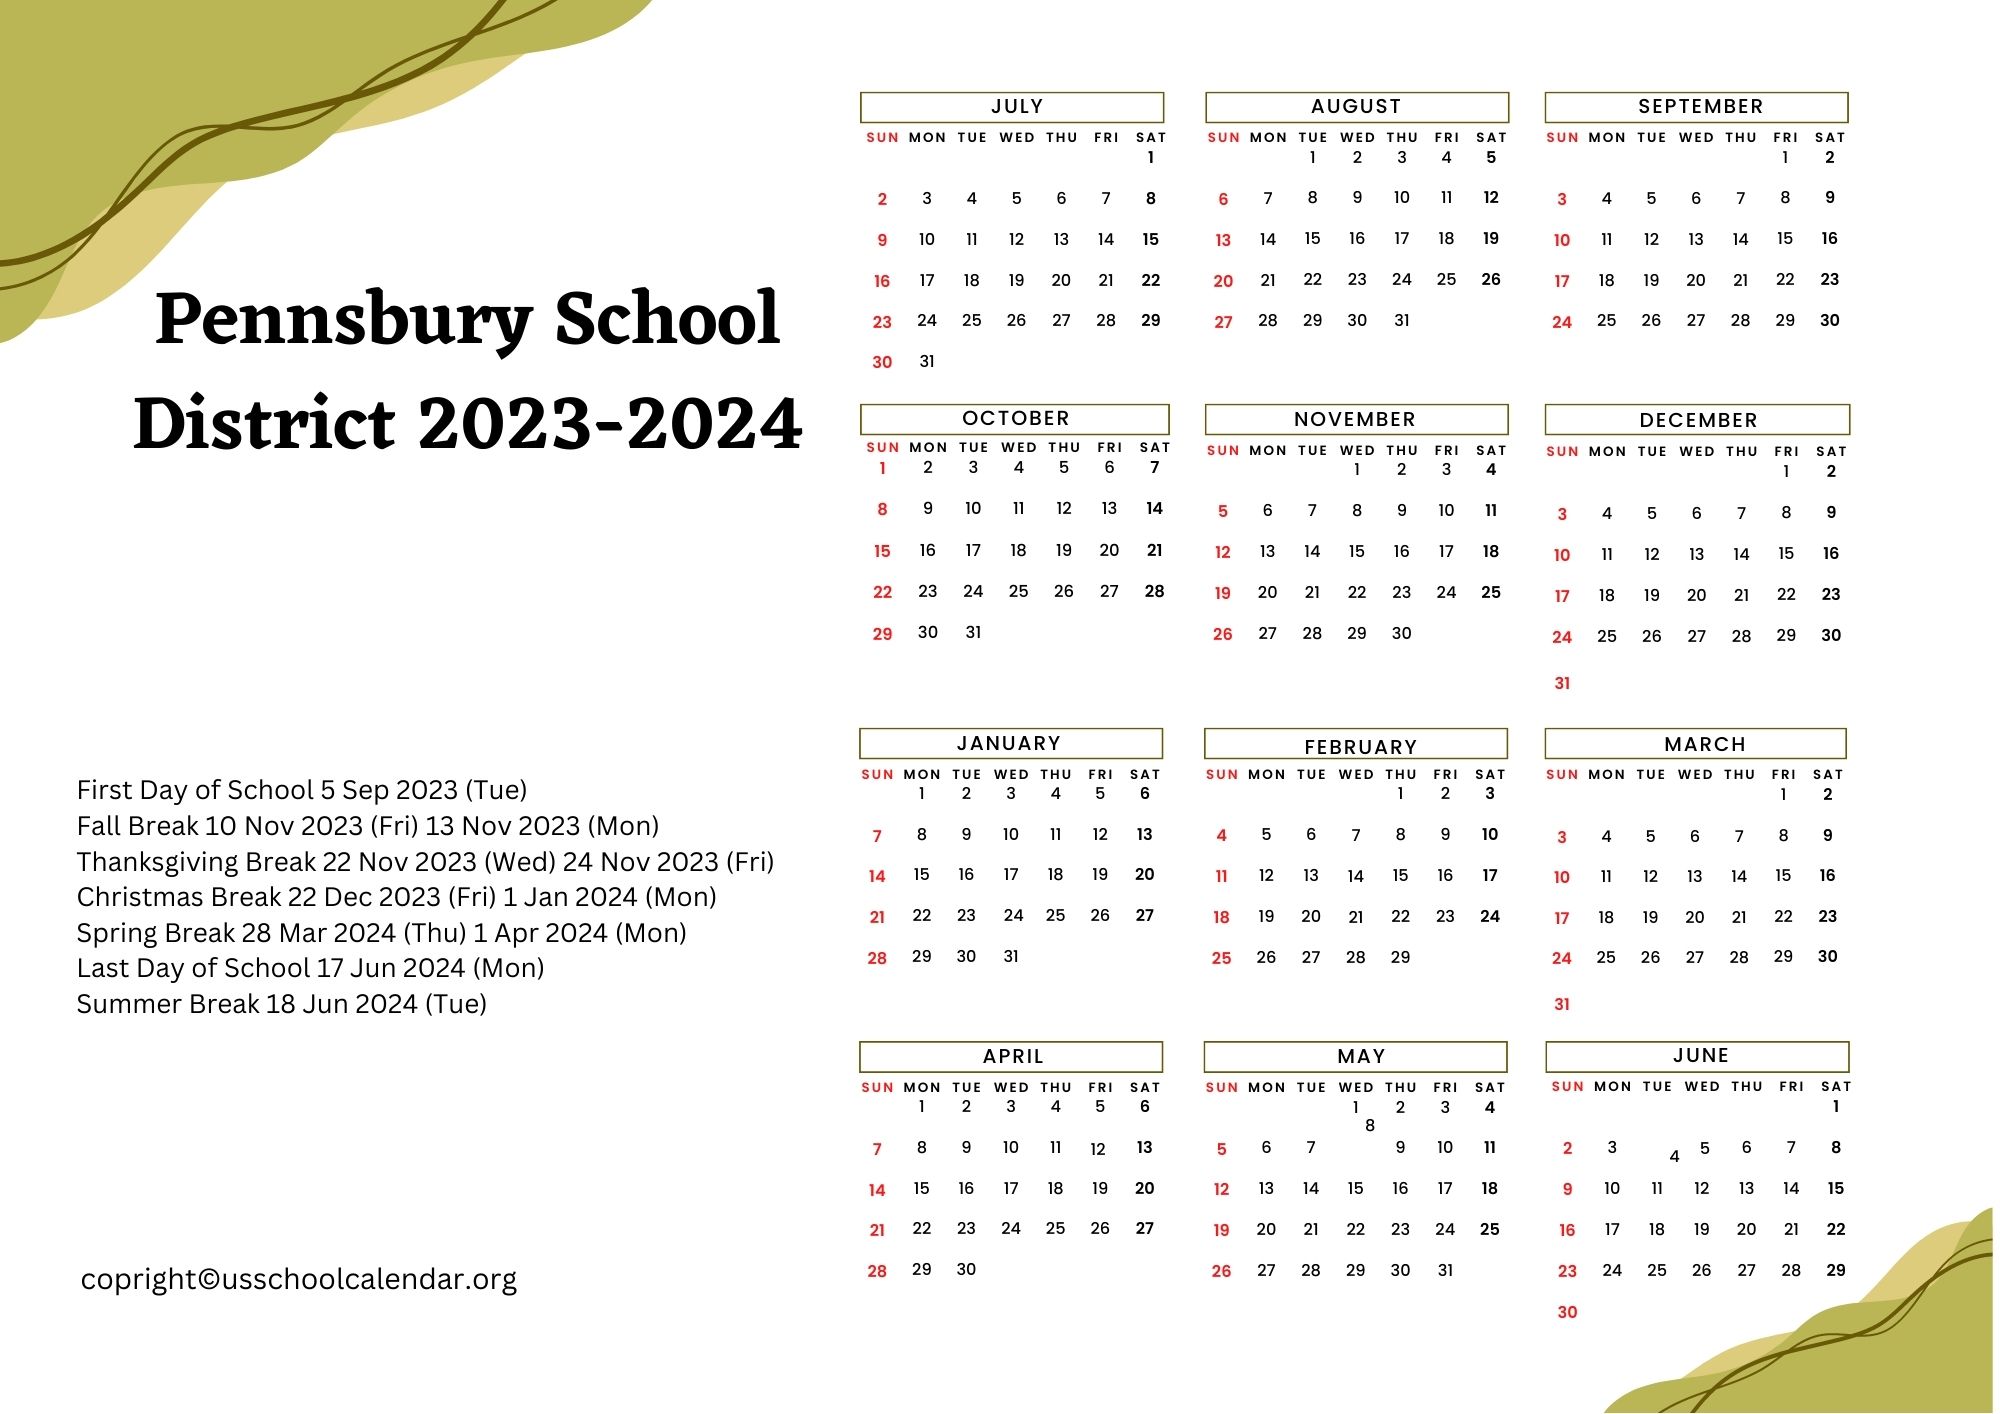 Pennsbury School District Calendar with Holidays 2023 2024